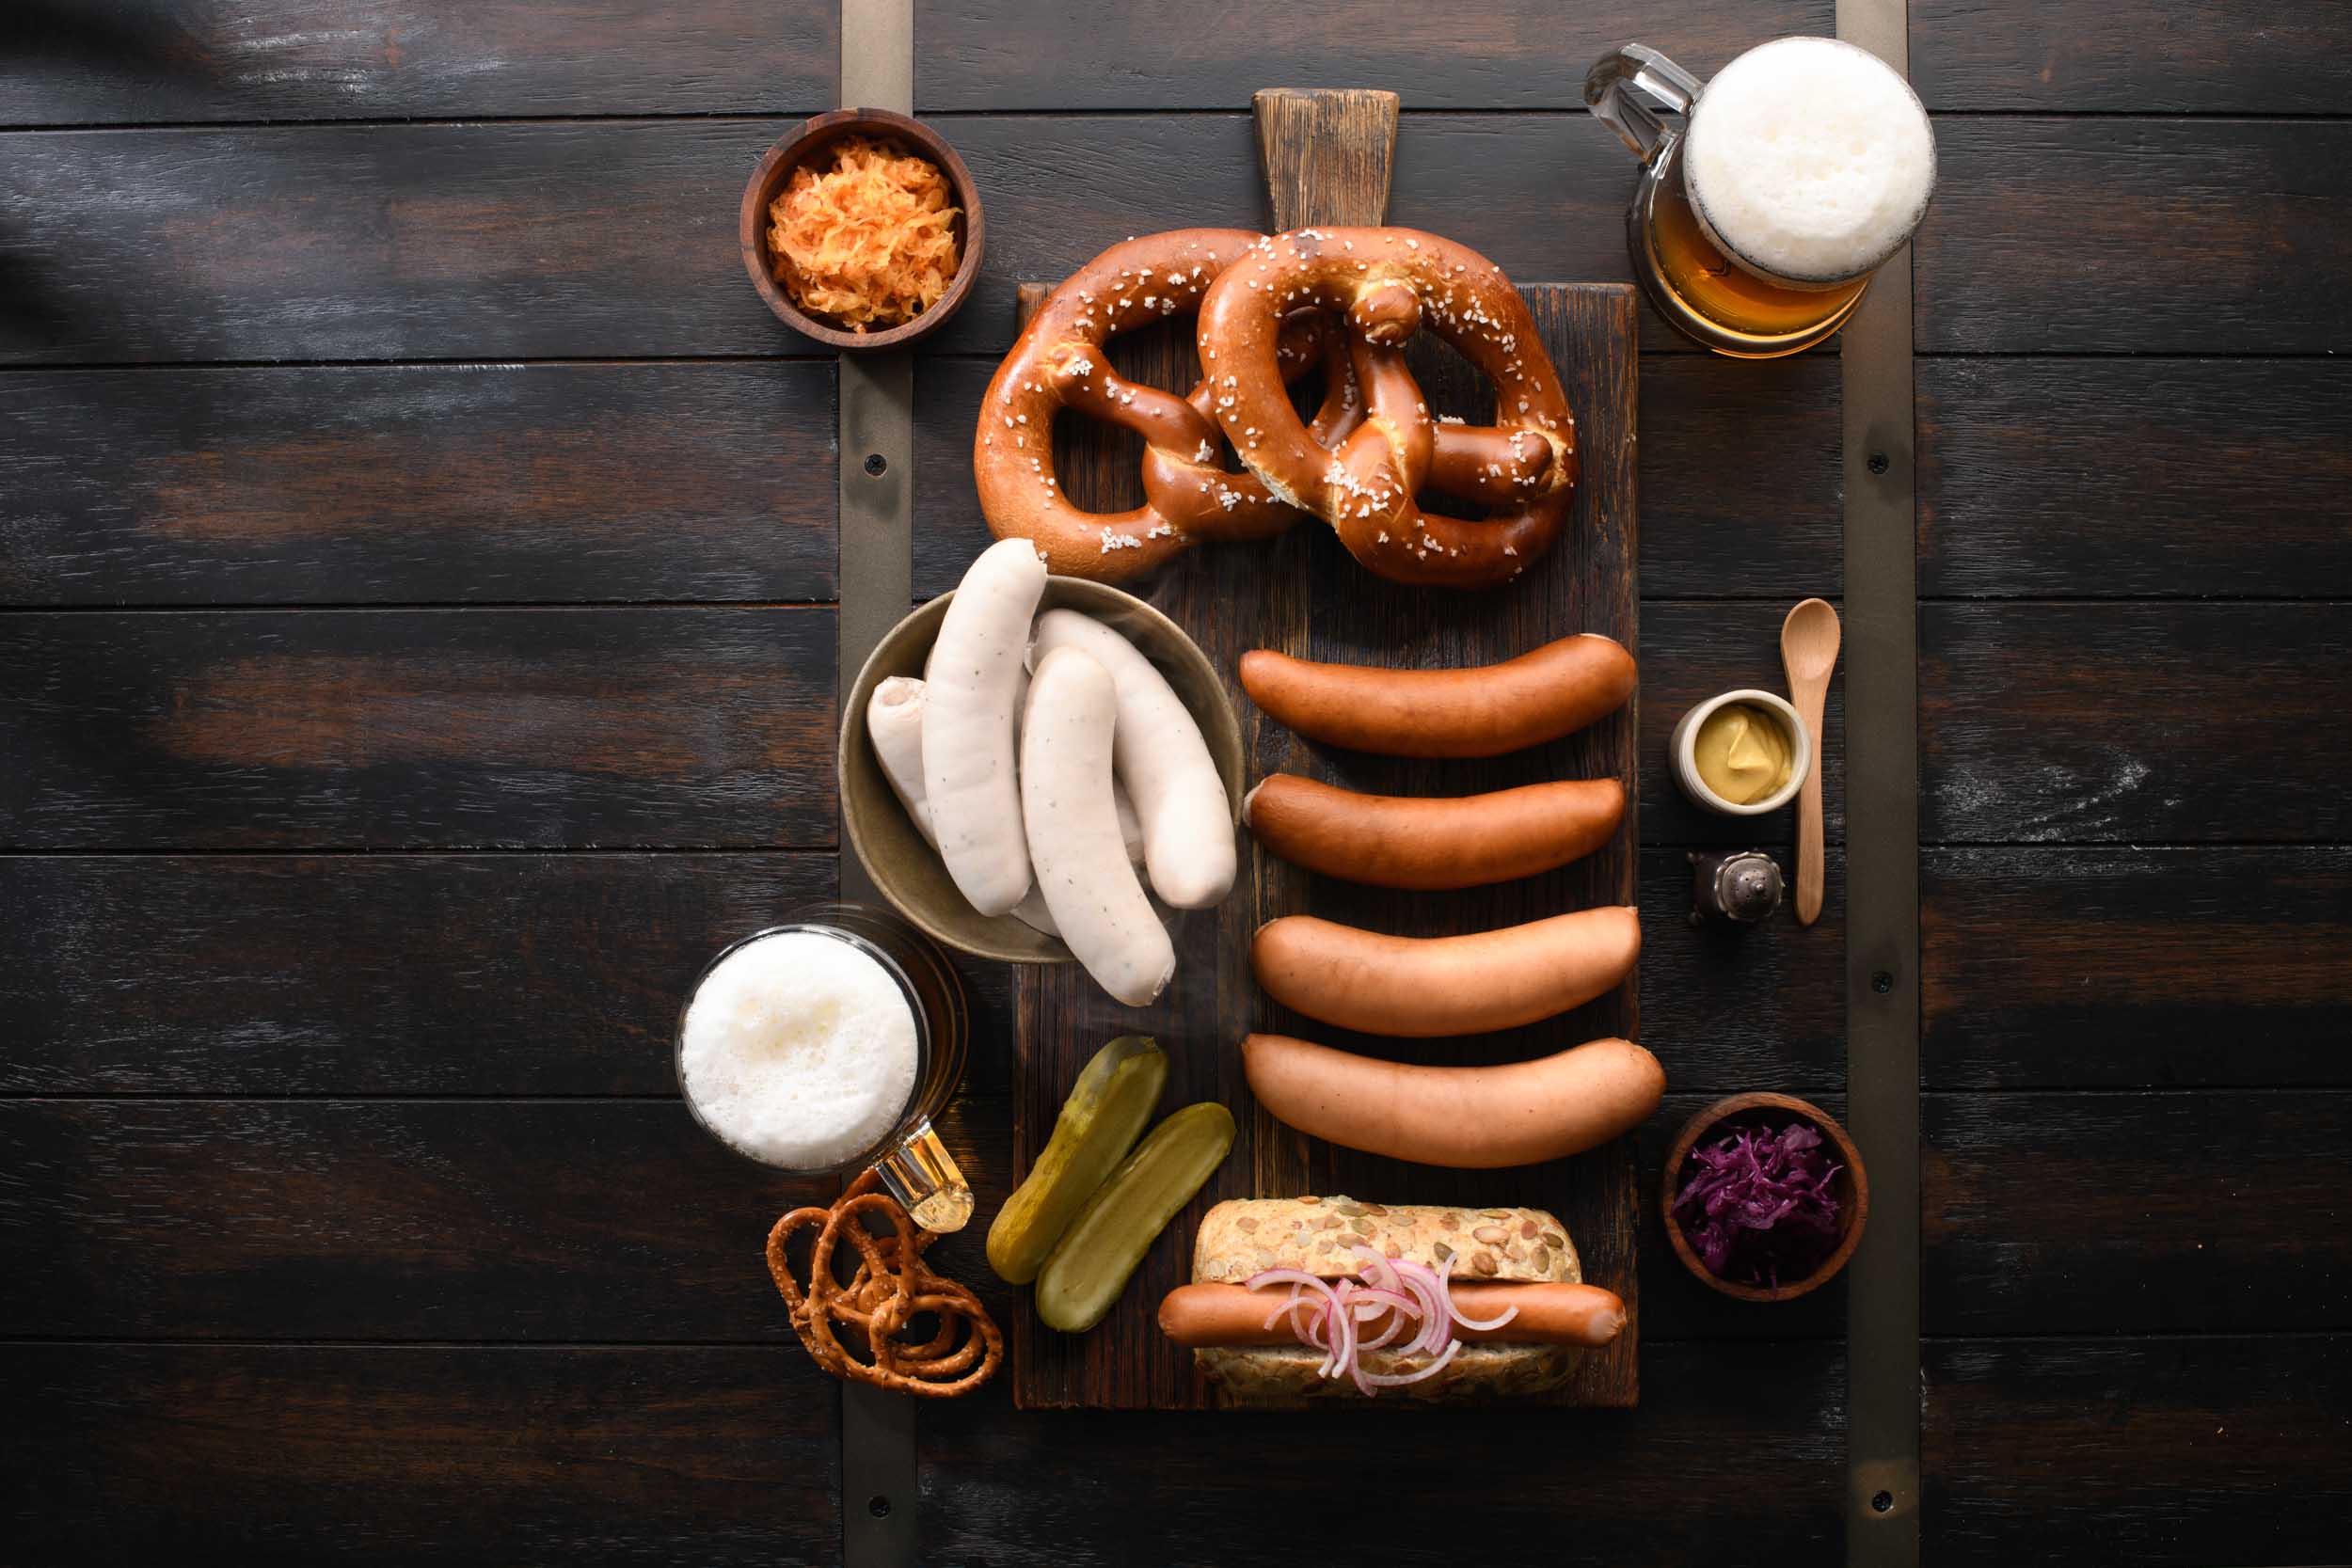 Gotzinger Smallgoods German Sausages on platter with pretzel and beer